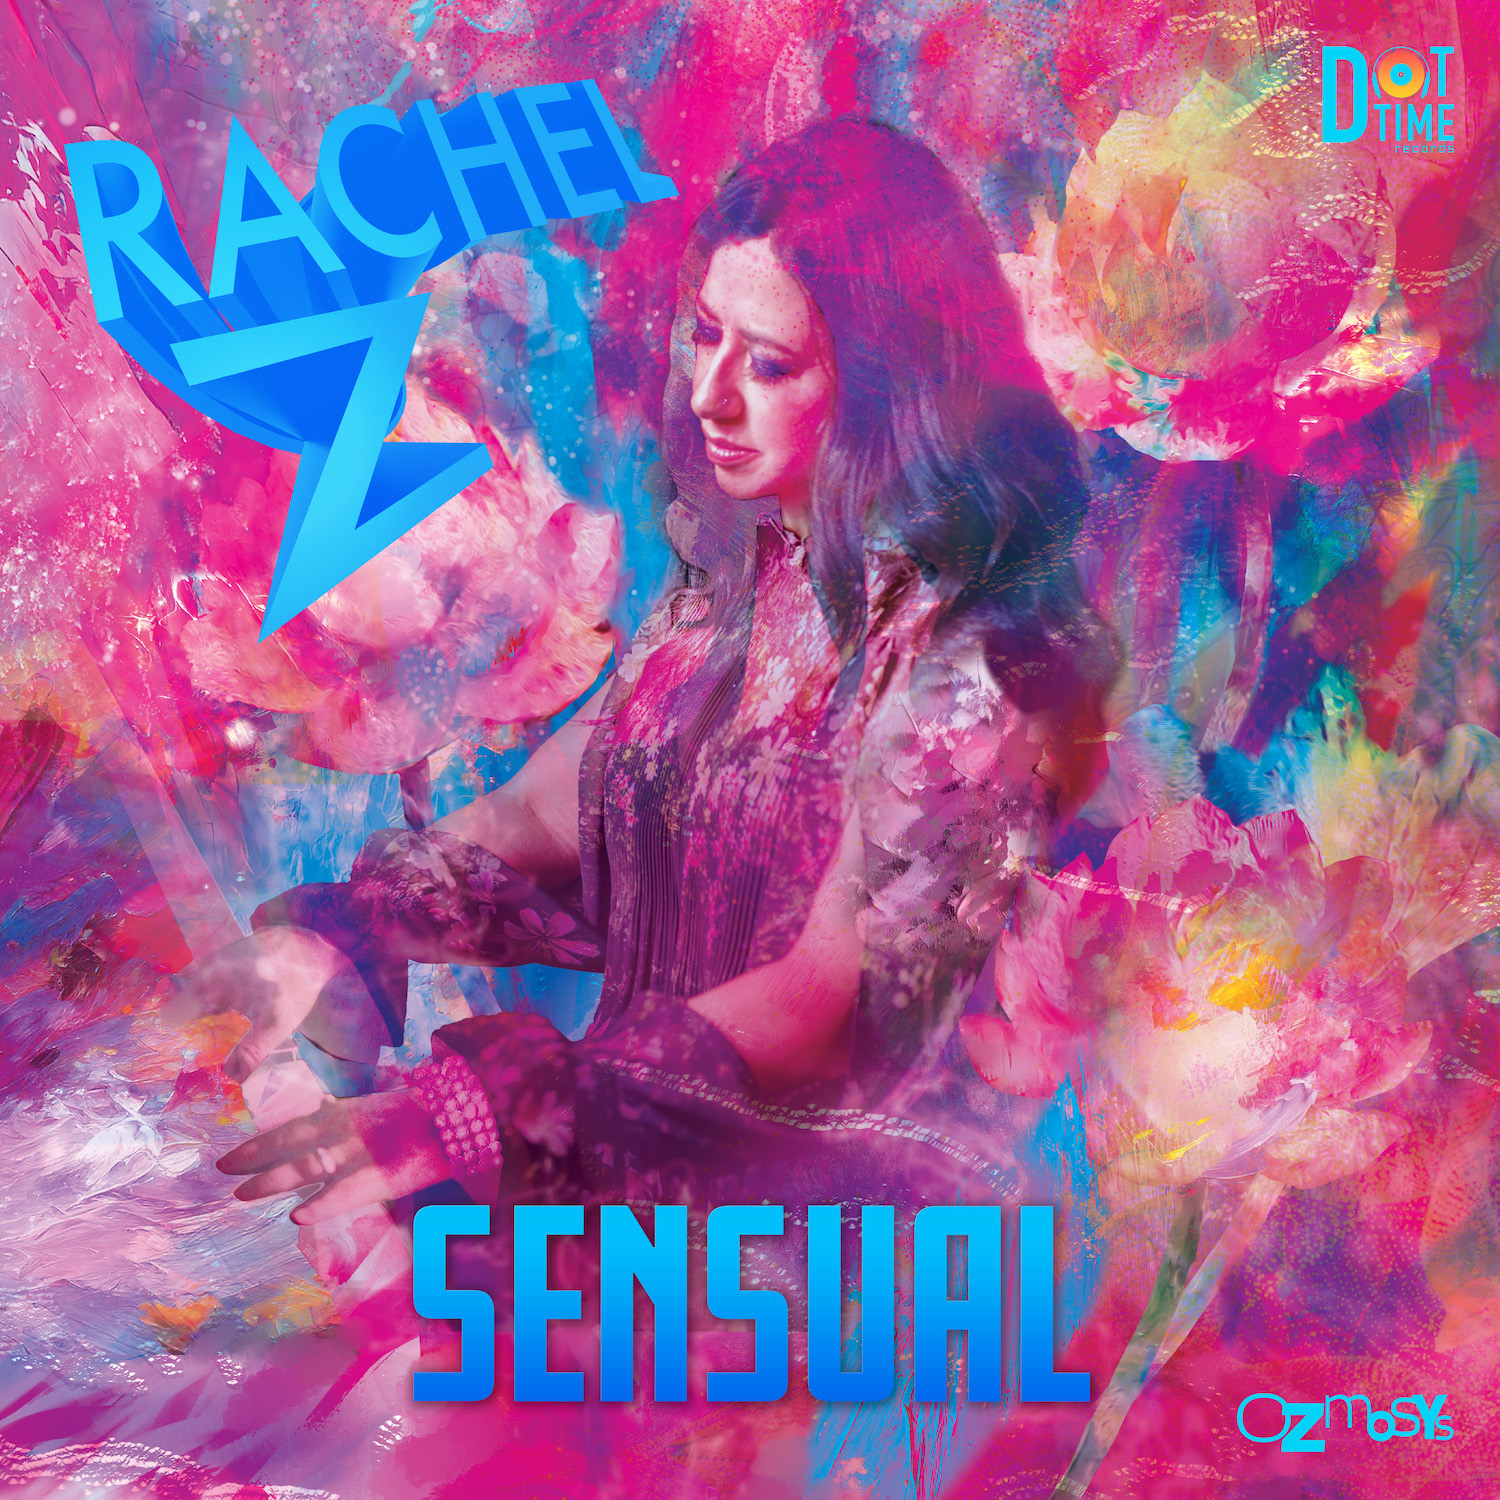 Rachel Z - Sensual Cover Art 1500x1500